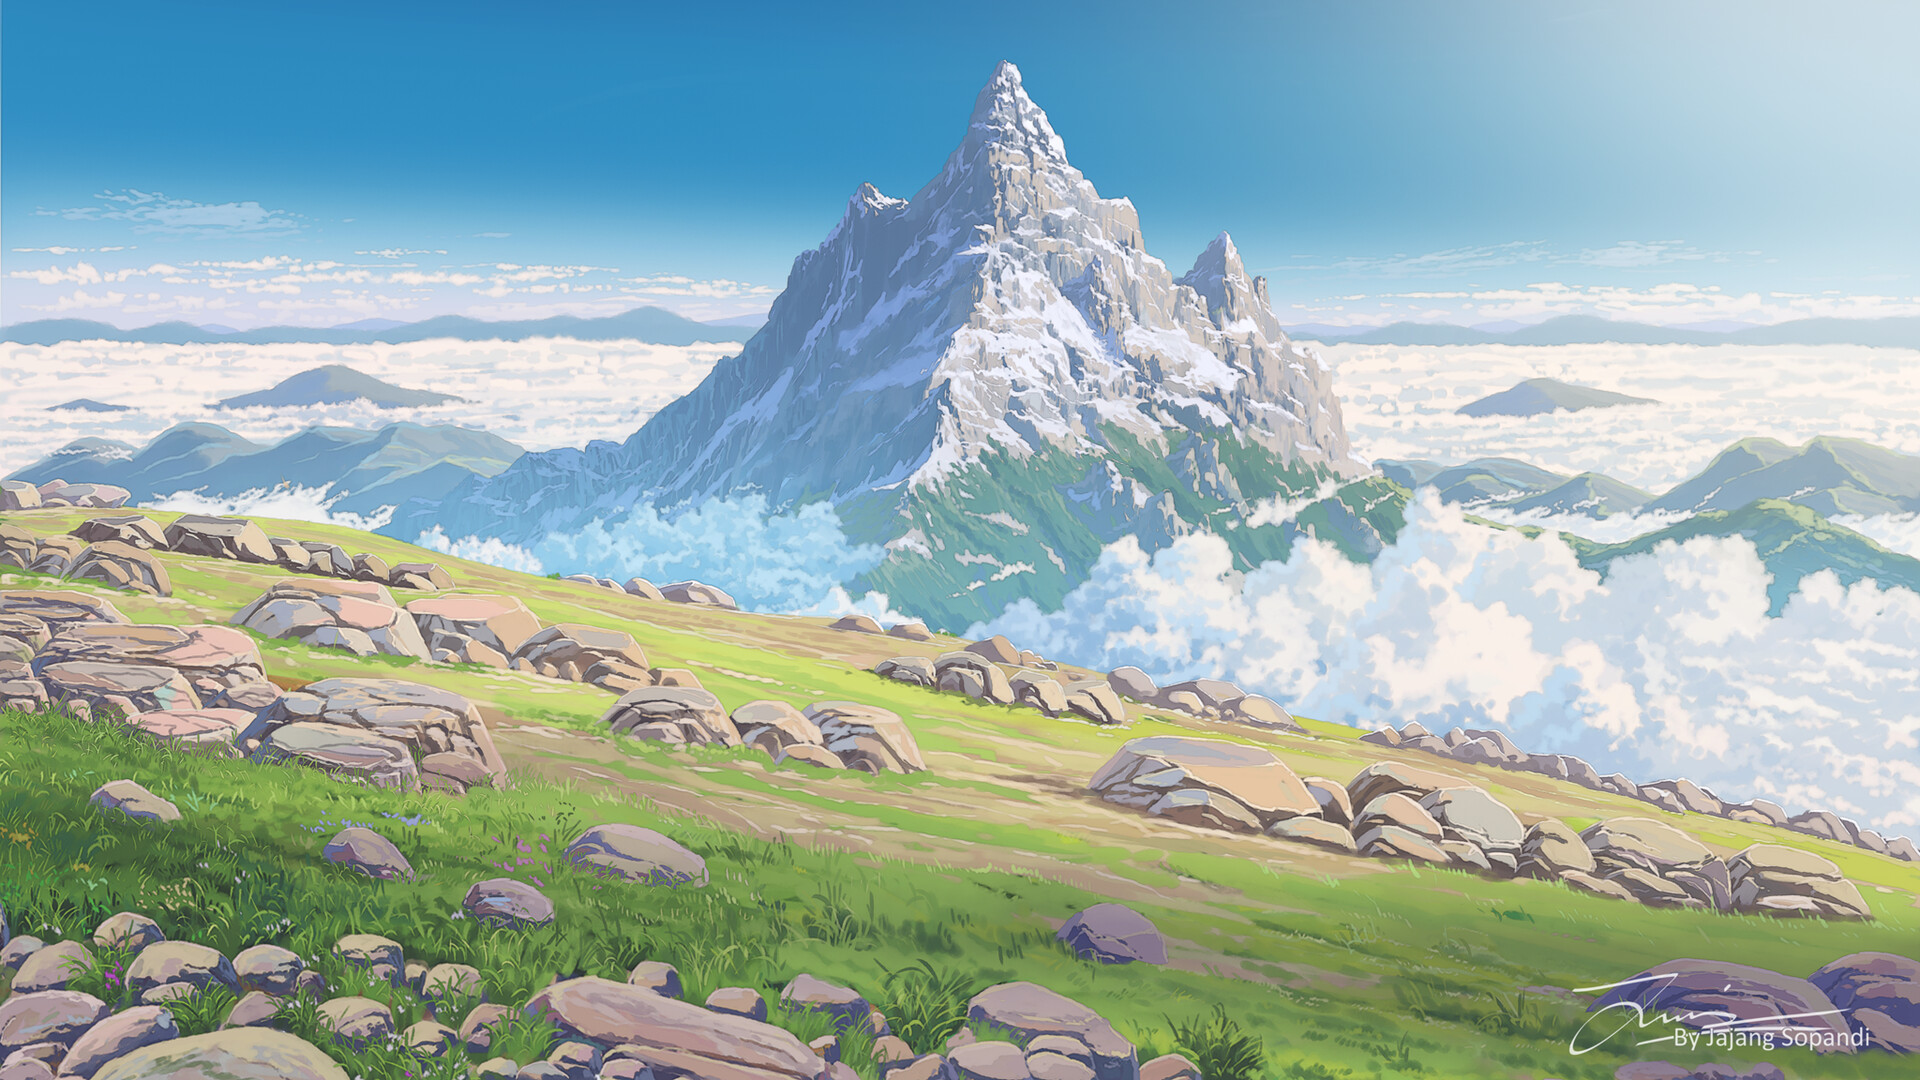 Lexica - Man hiking in a mountain illustration pokemon anime art style